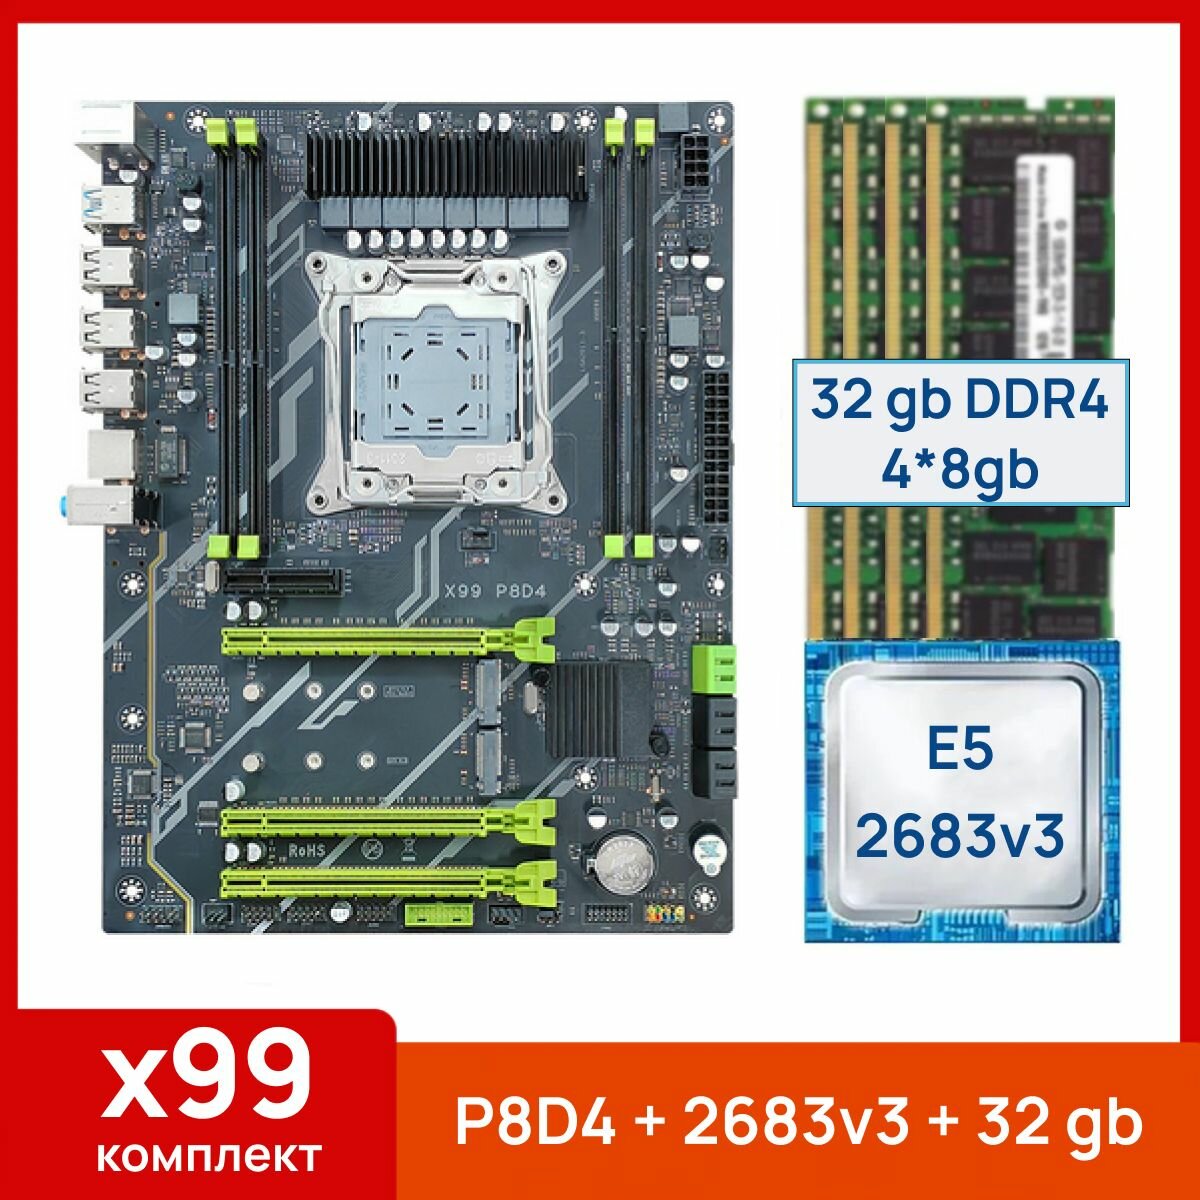 Комплект: Atermiter X99 P8D4 + Xeon E5 2683v3 + 32 gb (4x8gb) DDR4 ecc reg